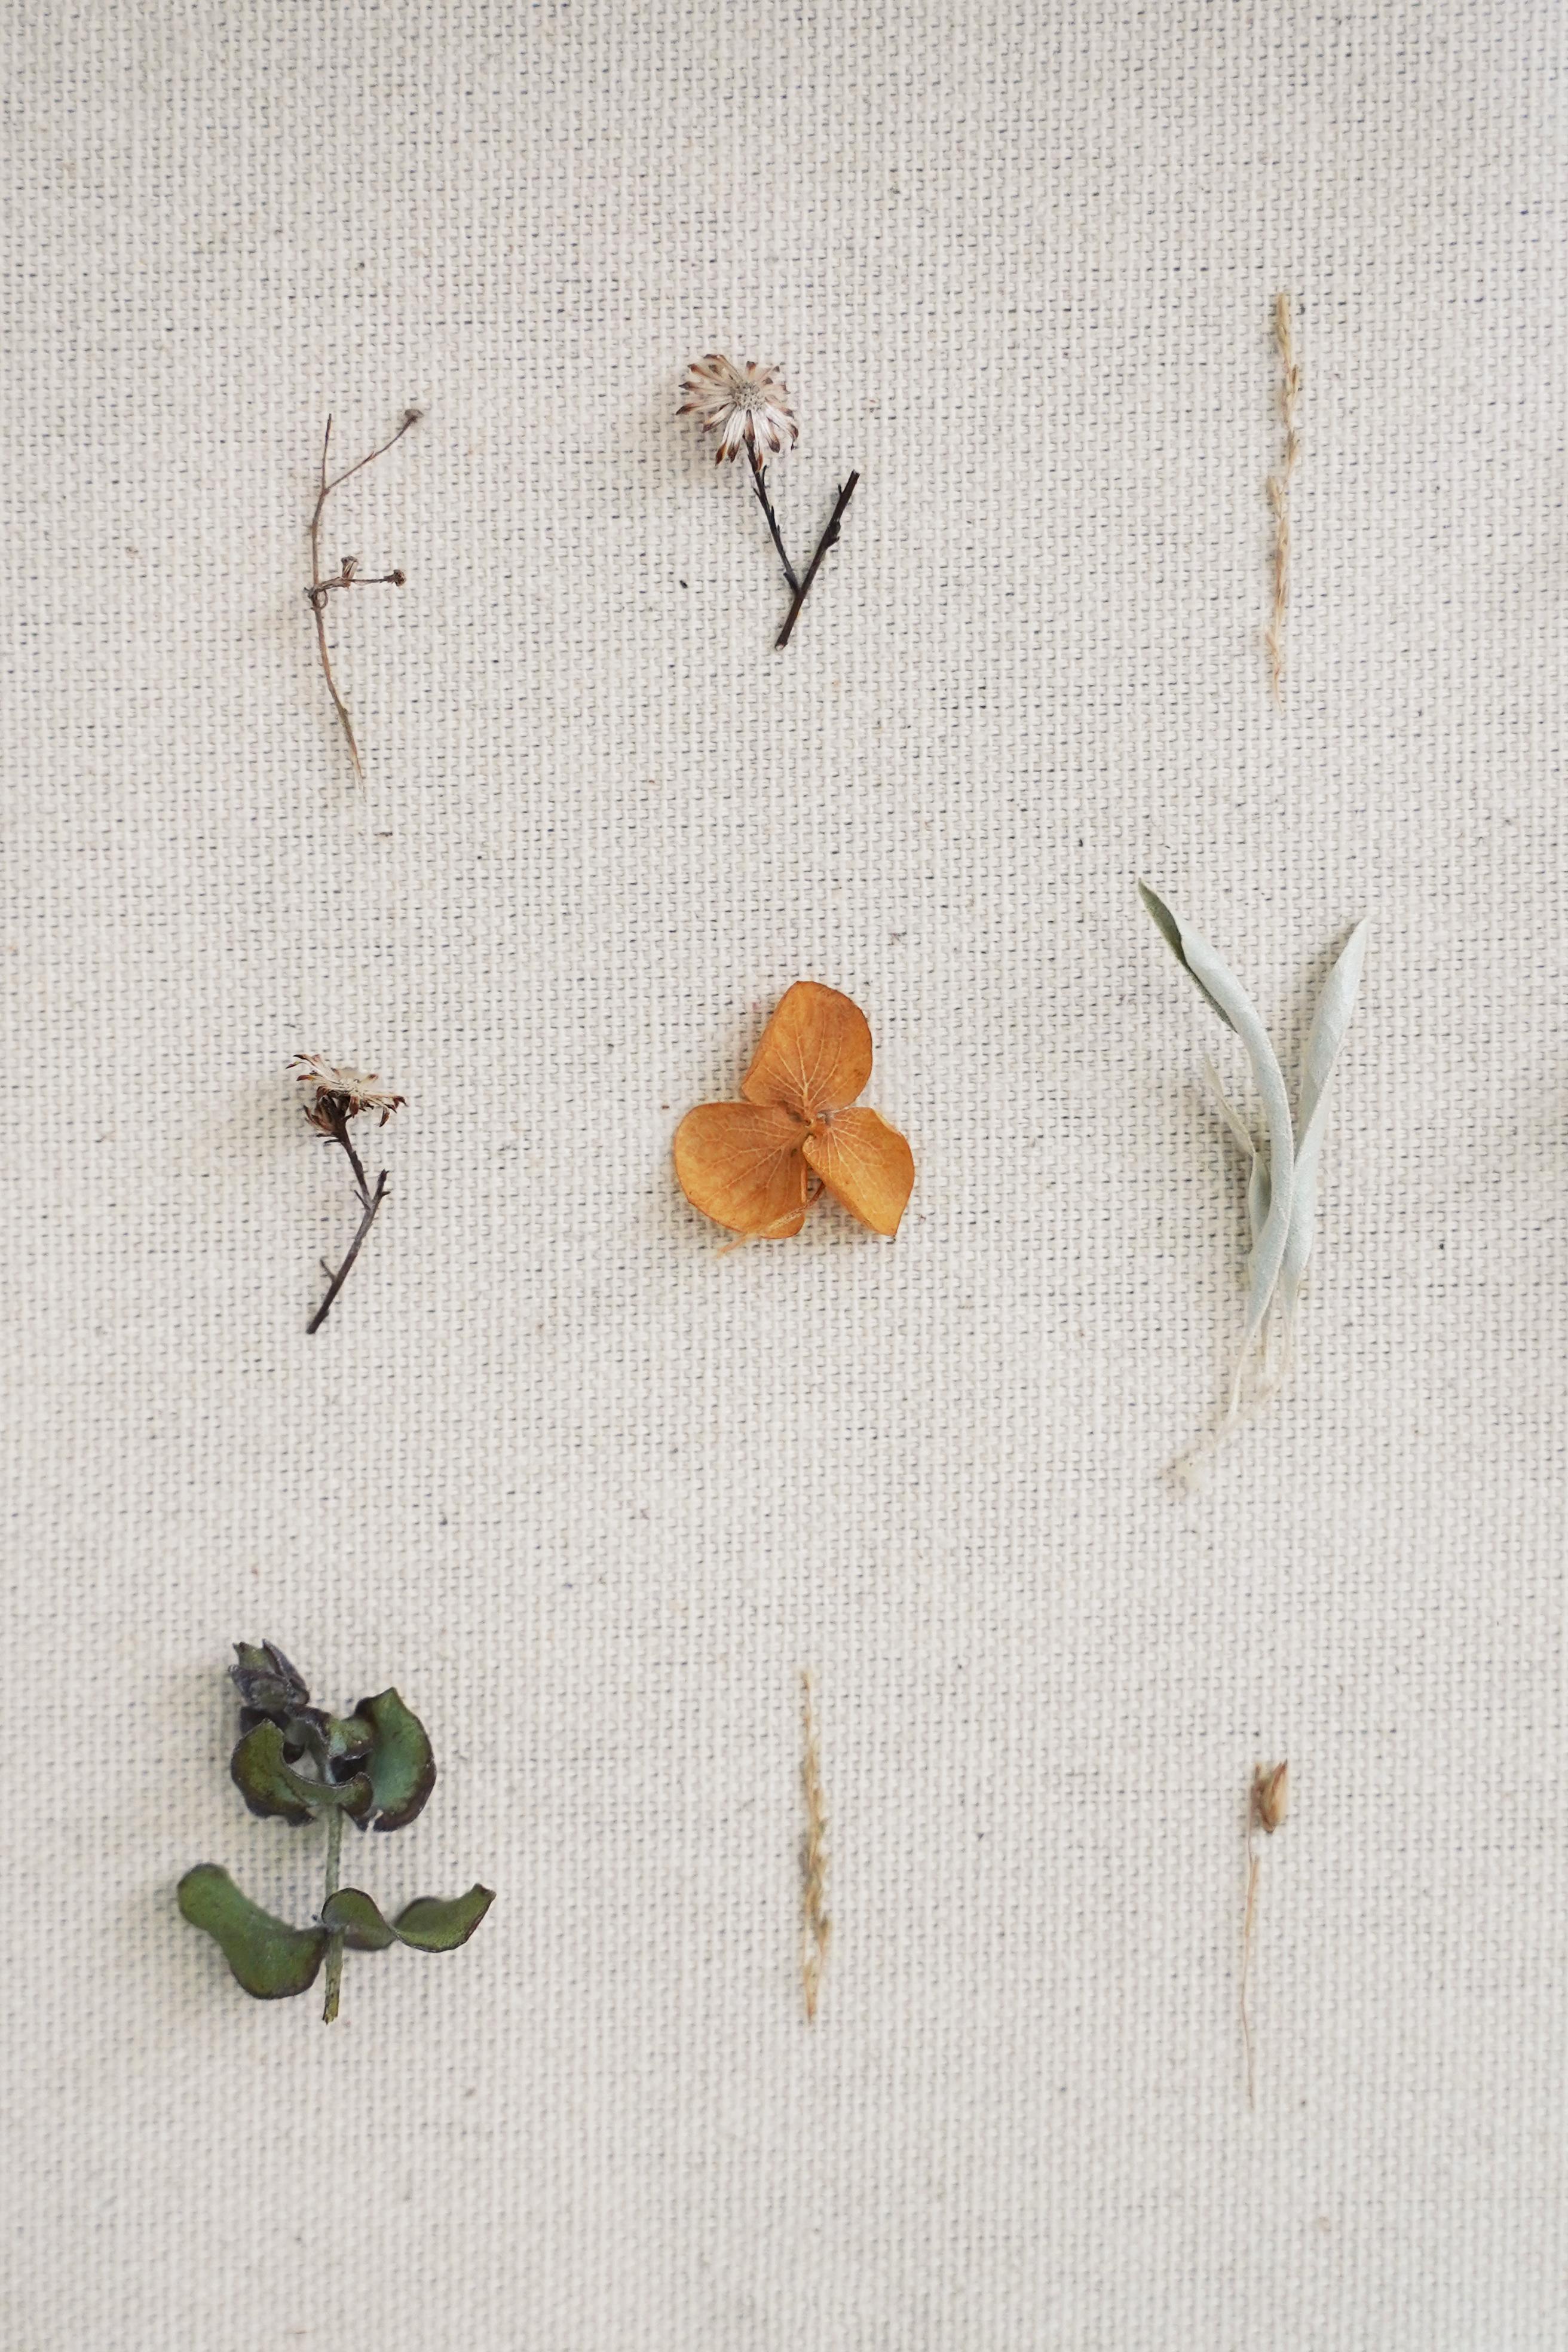 Dried Flora Composition, Grid & Natural Composition 13